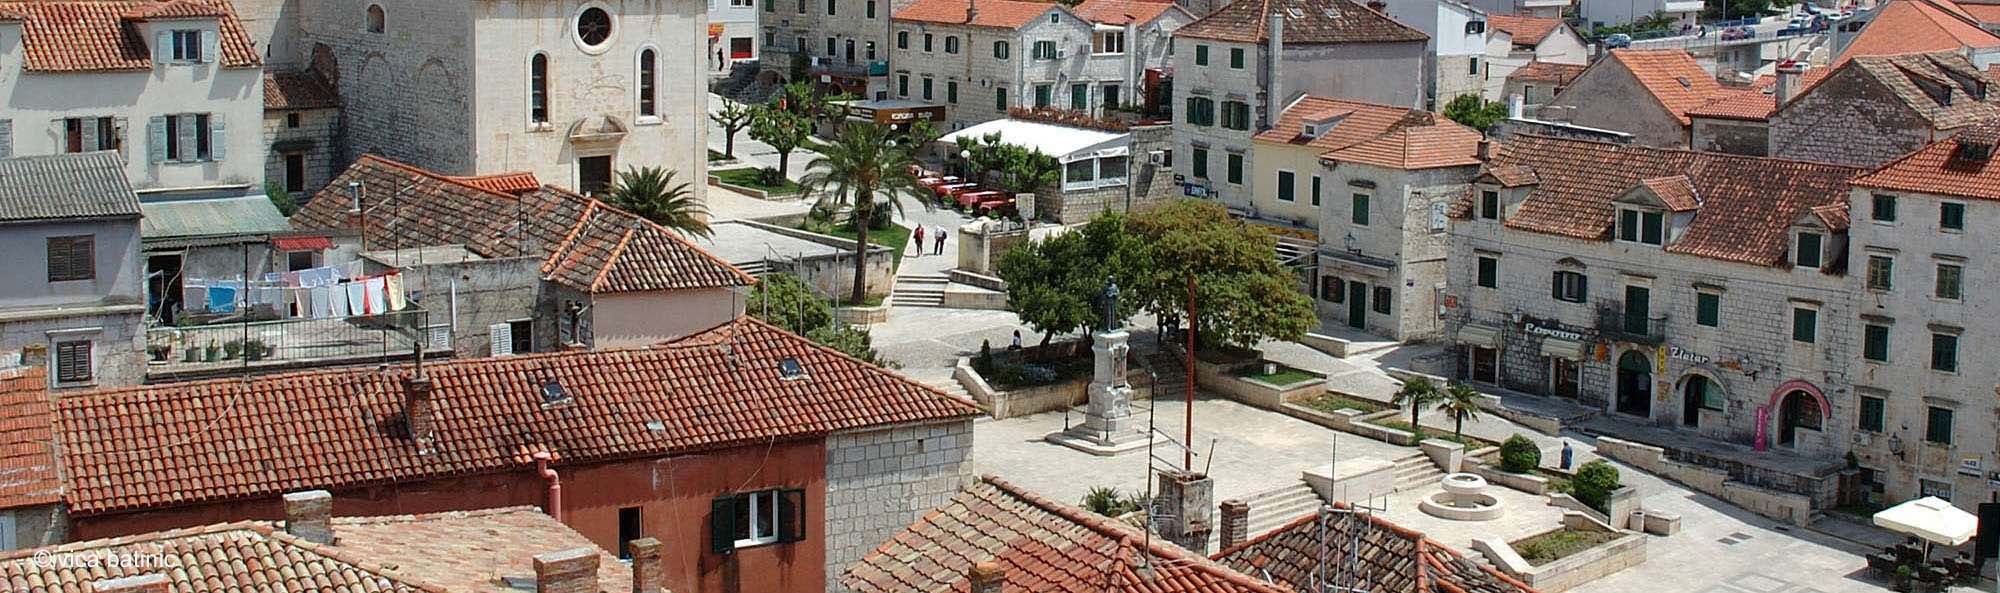 Kacic-Platz, Makarska, Dalmatien, Kroatien